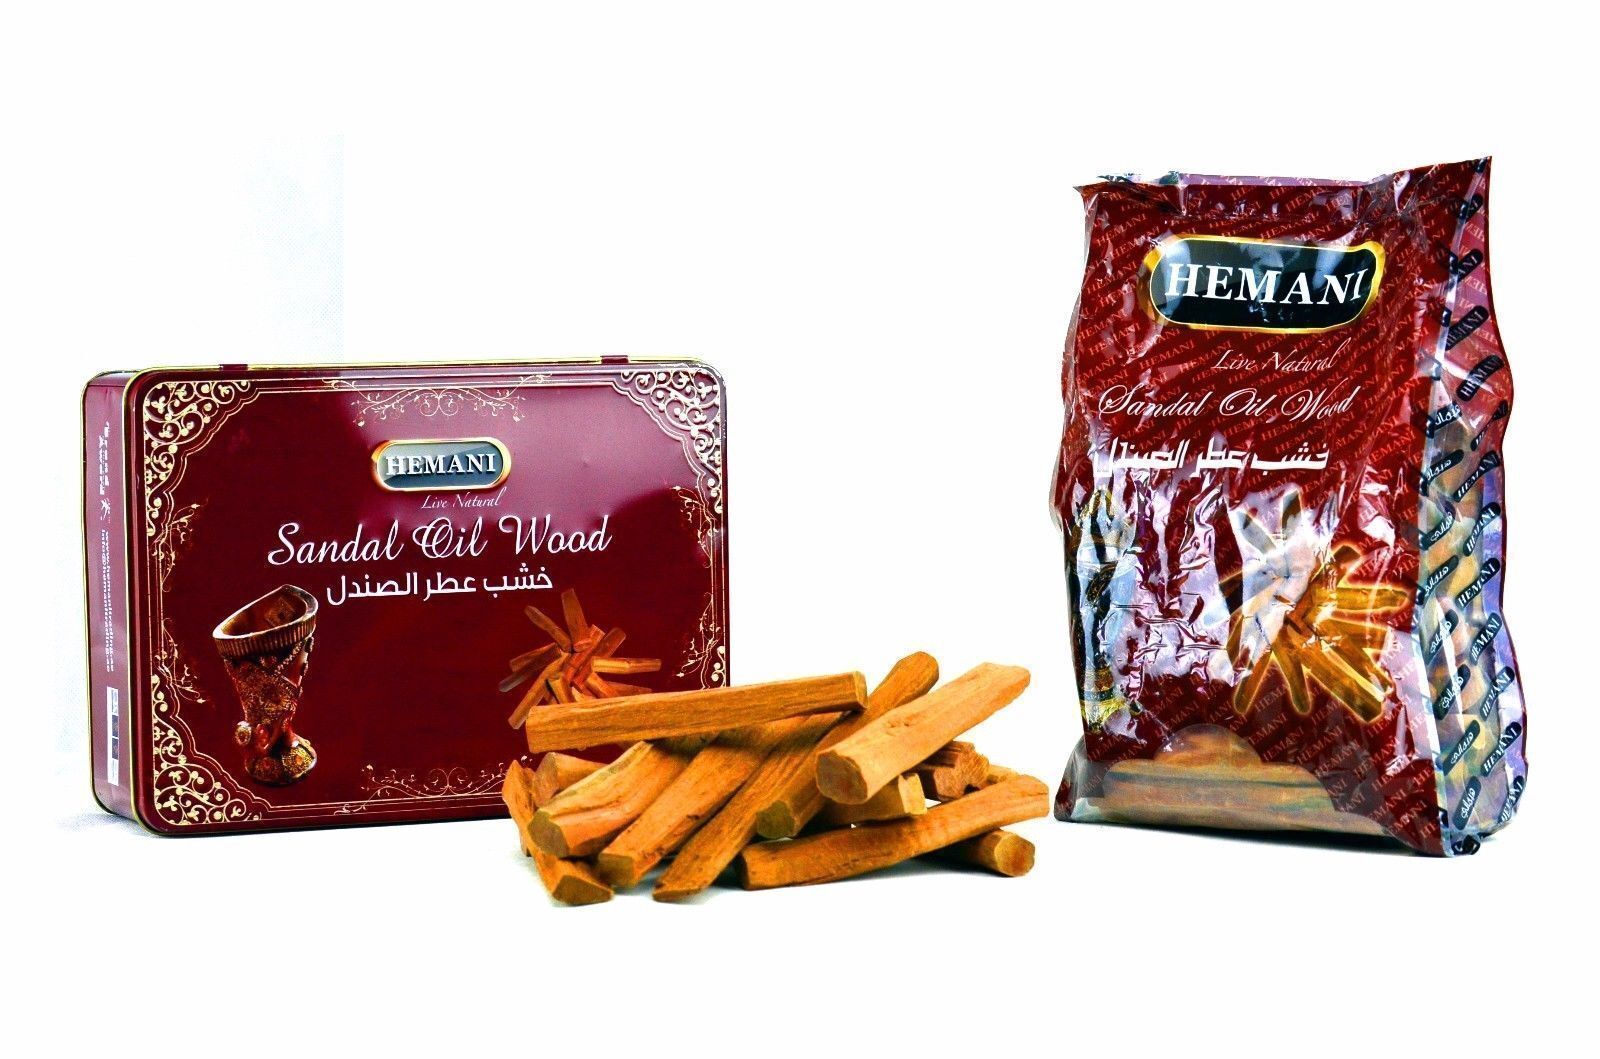 Hemani Sandal Oil Wood Box - 1000g - Sticks - 100% Natural Sandalwood Incense